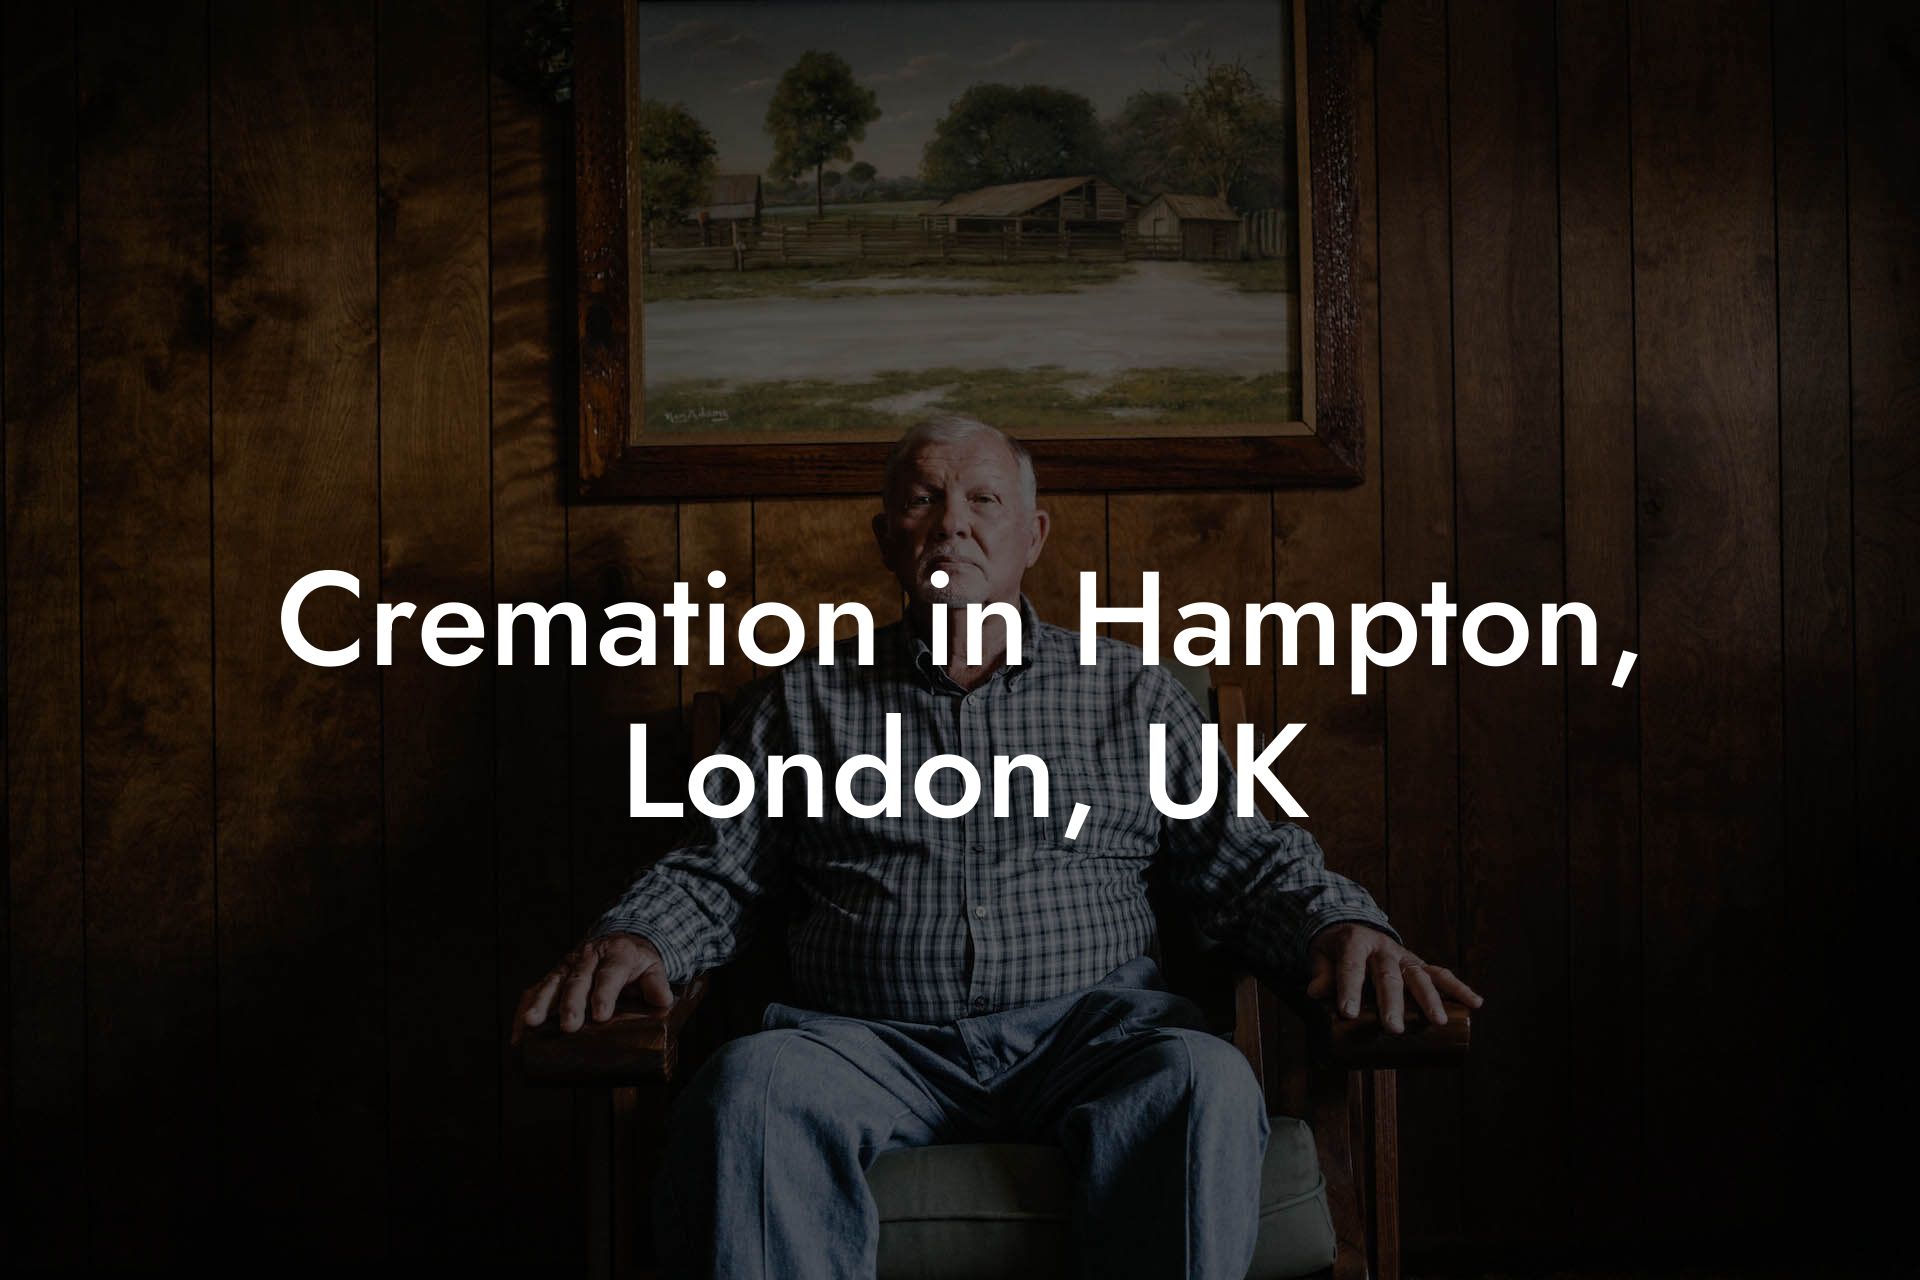 Cremation in Hampton, London, UK